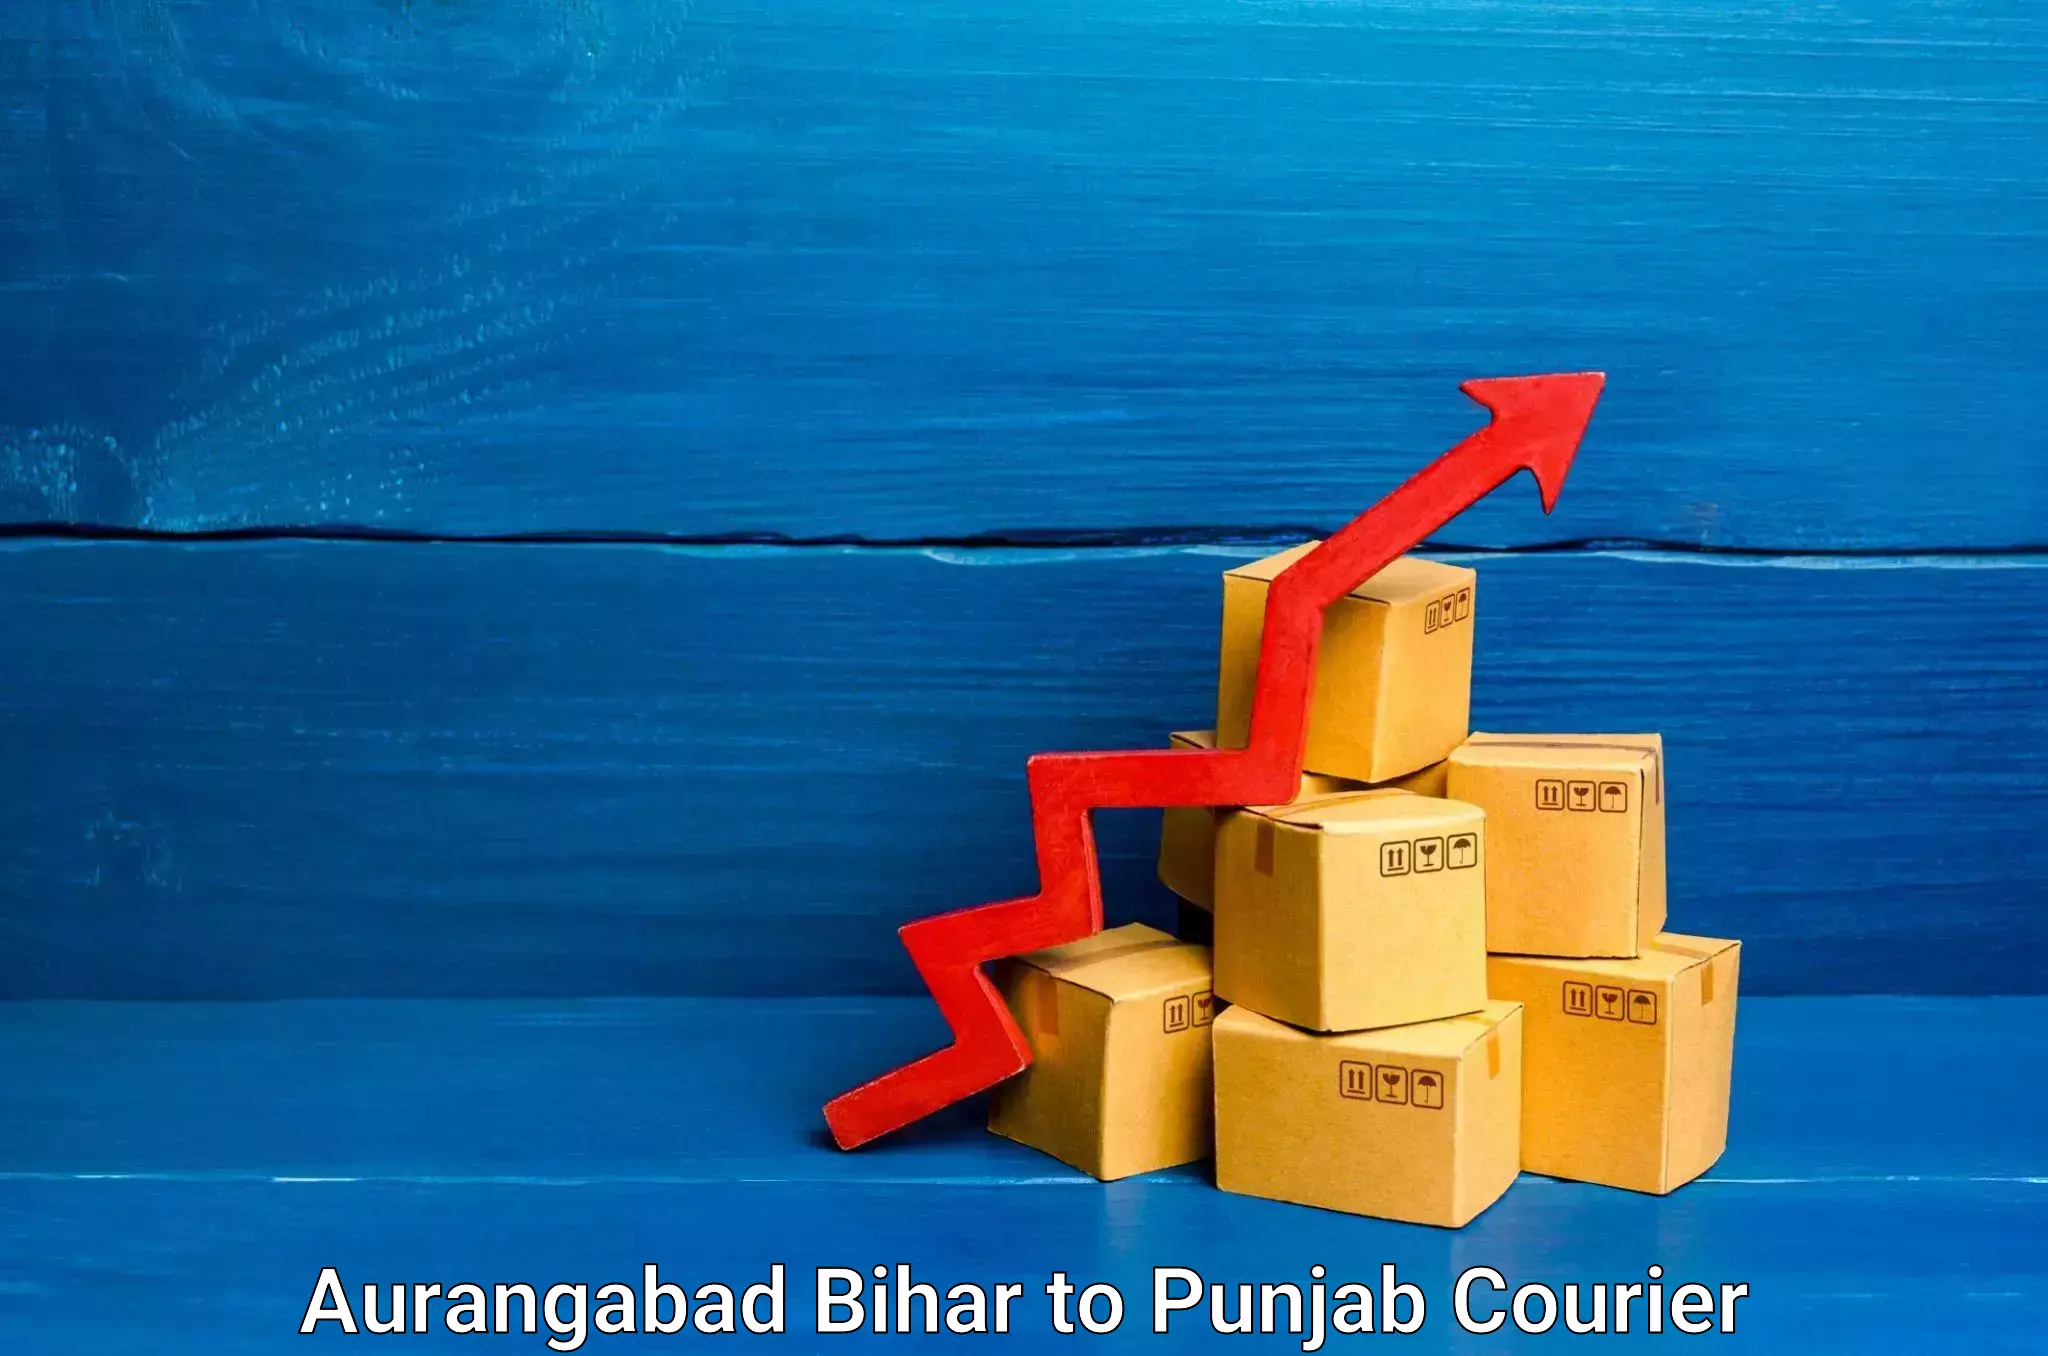 Efficient moving company Aurangabad Bihar to Punjab